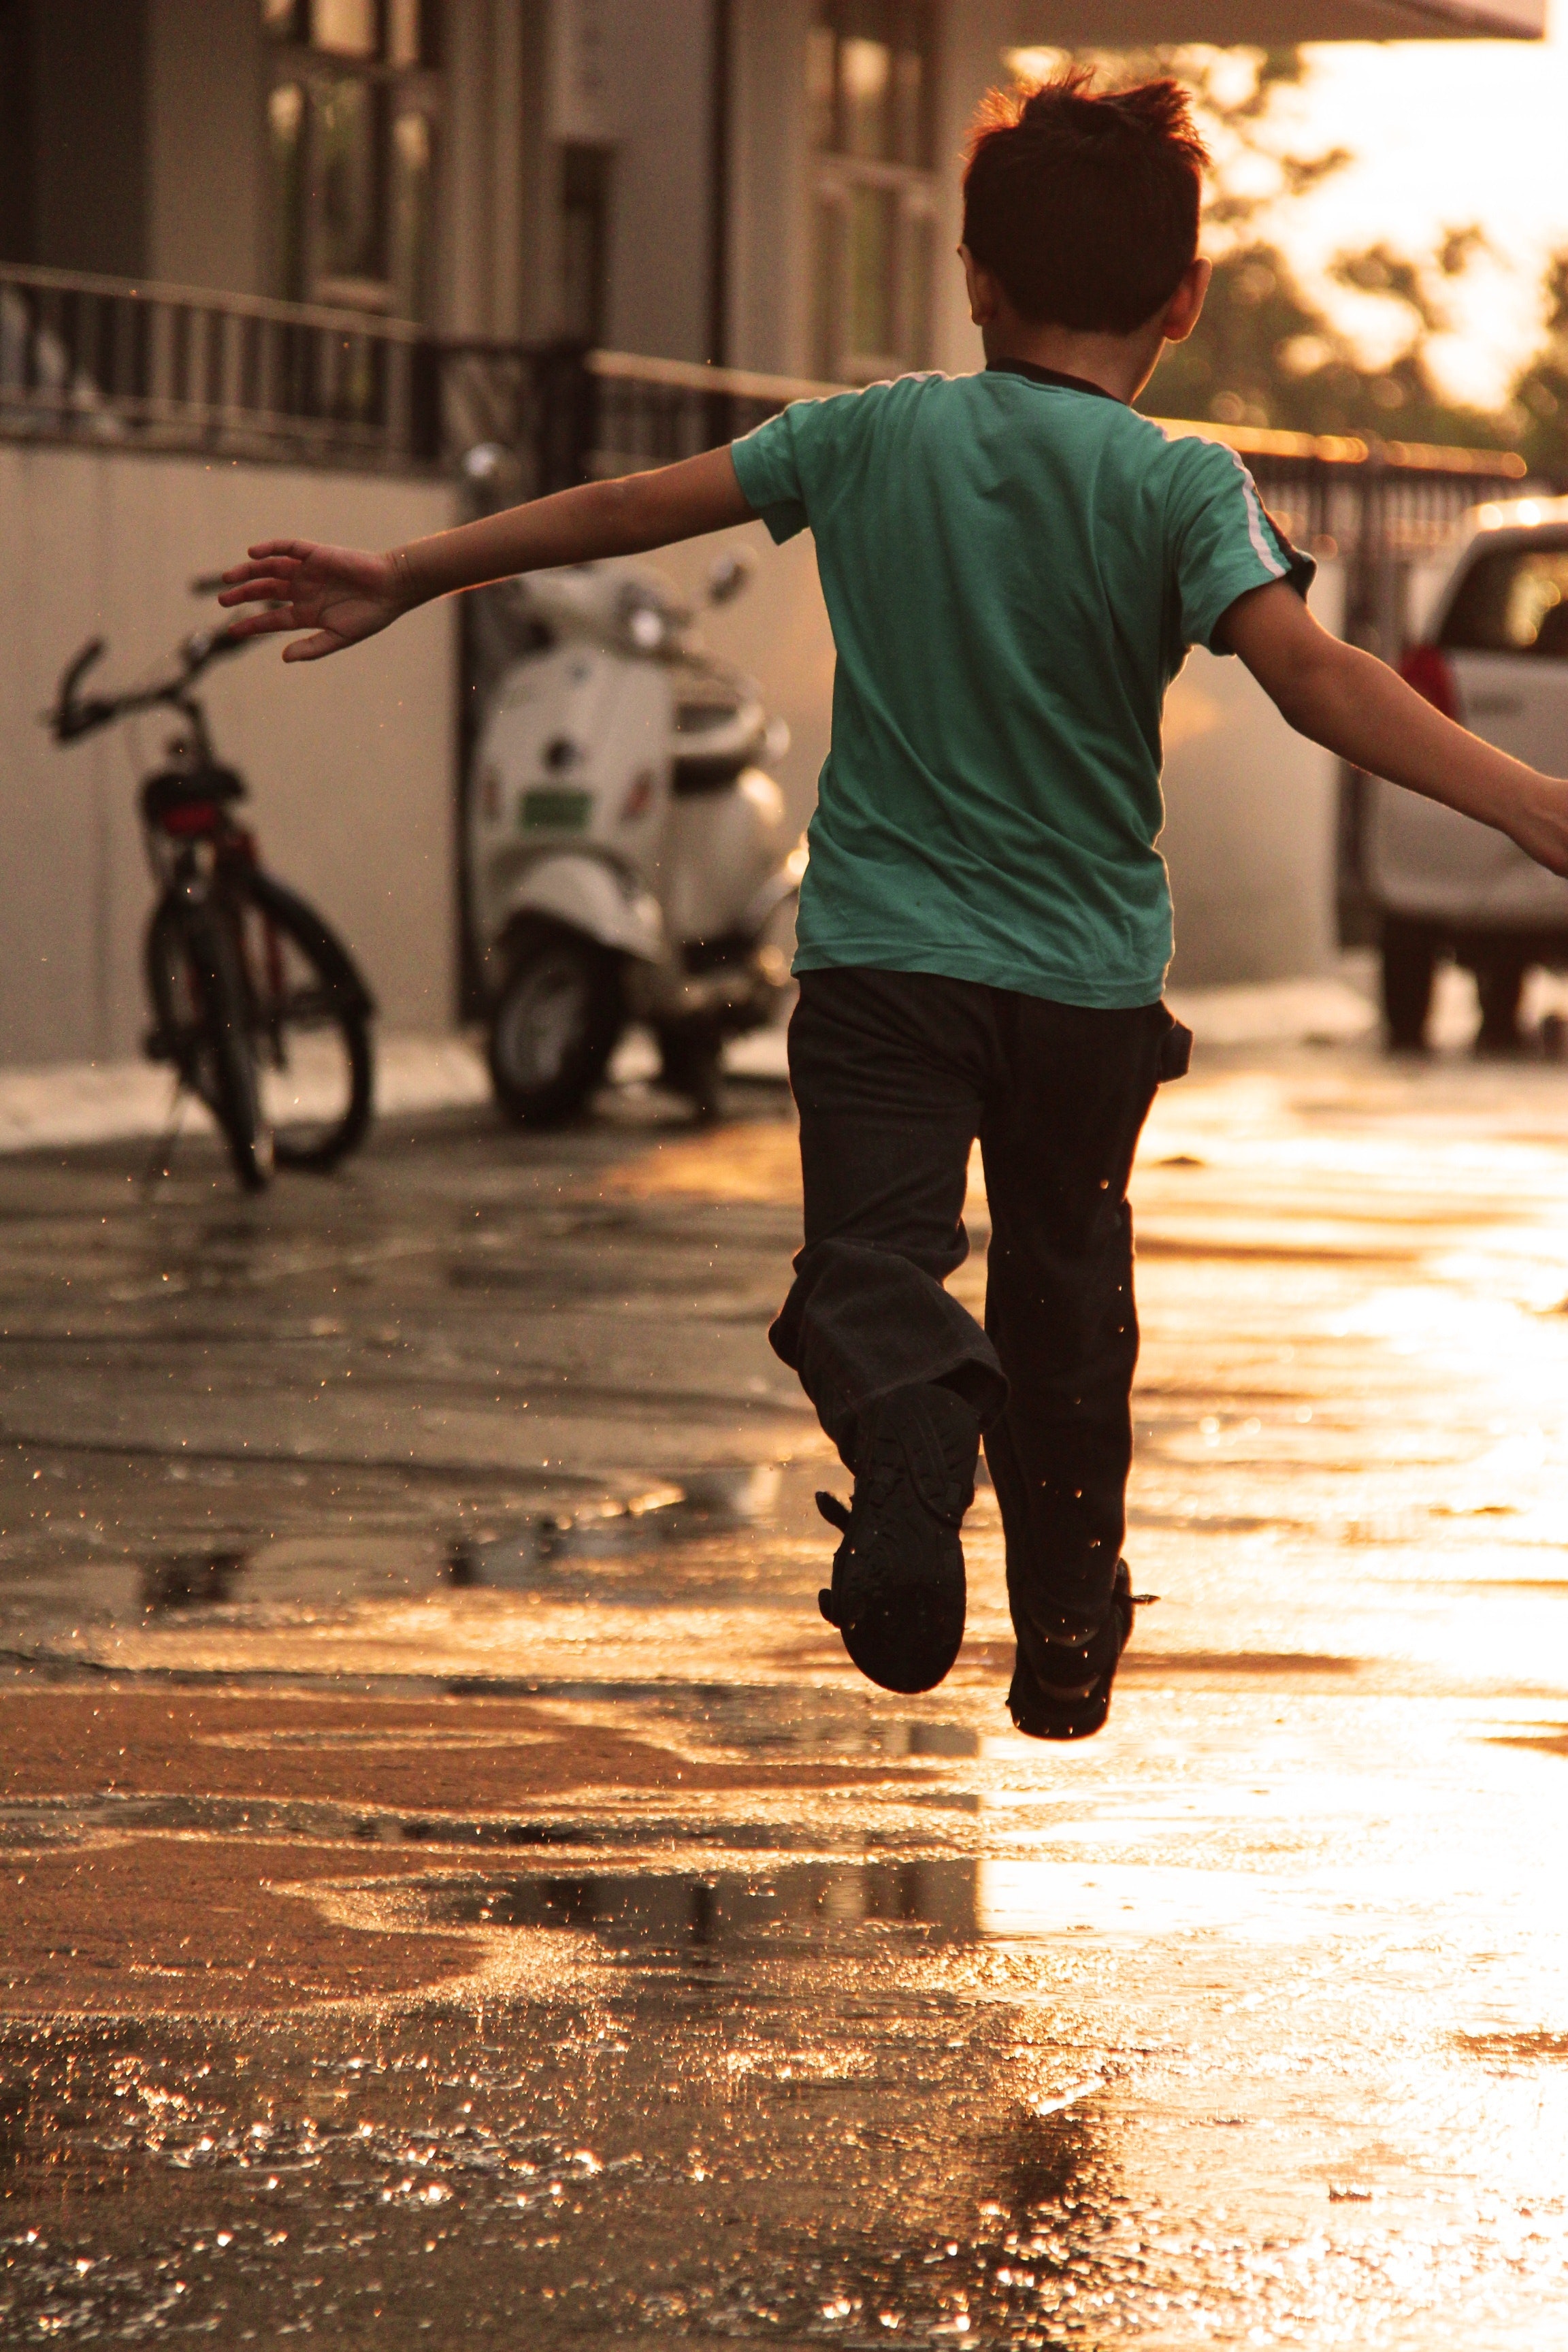 Boy in Green T Shirt Running on Wet Road during Daytime, Boy, Child, Fun, Jumping, HQ Photo